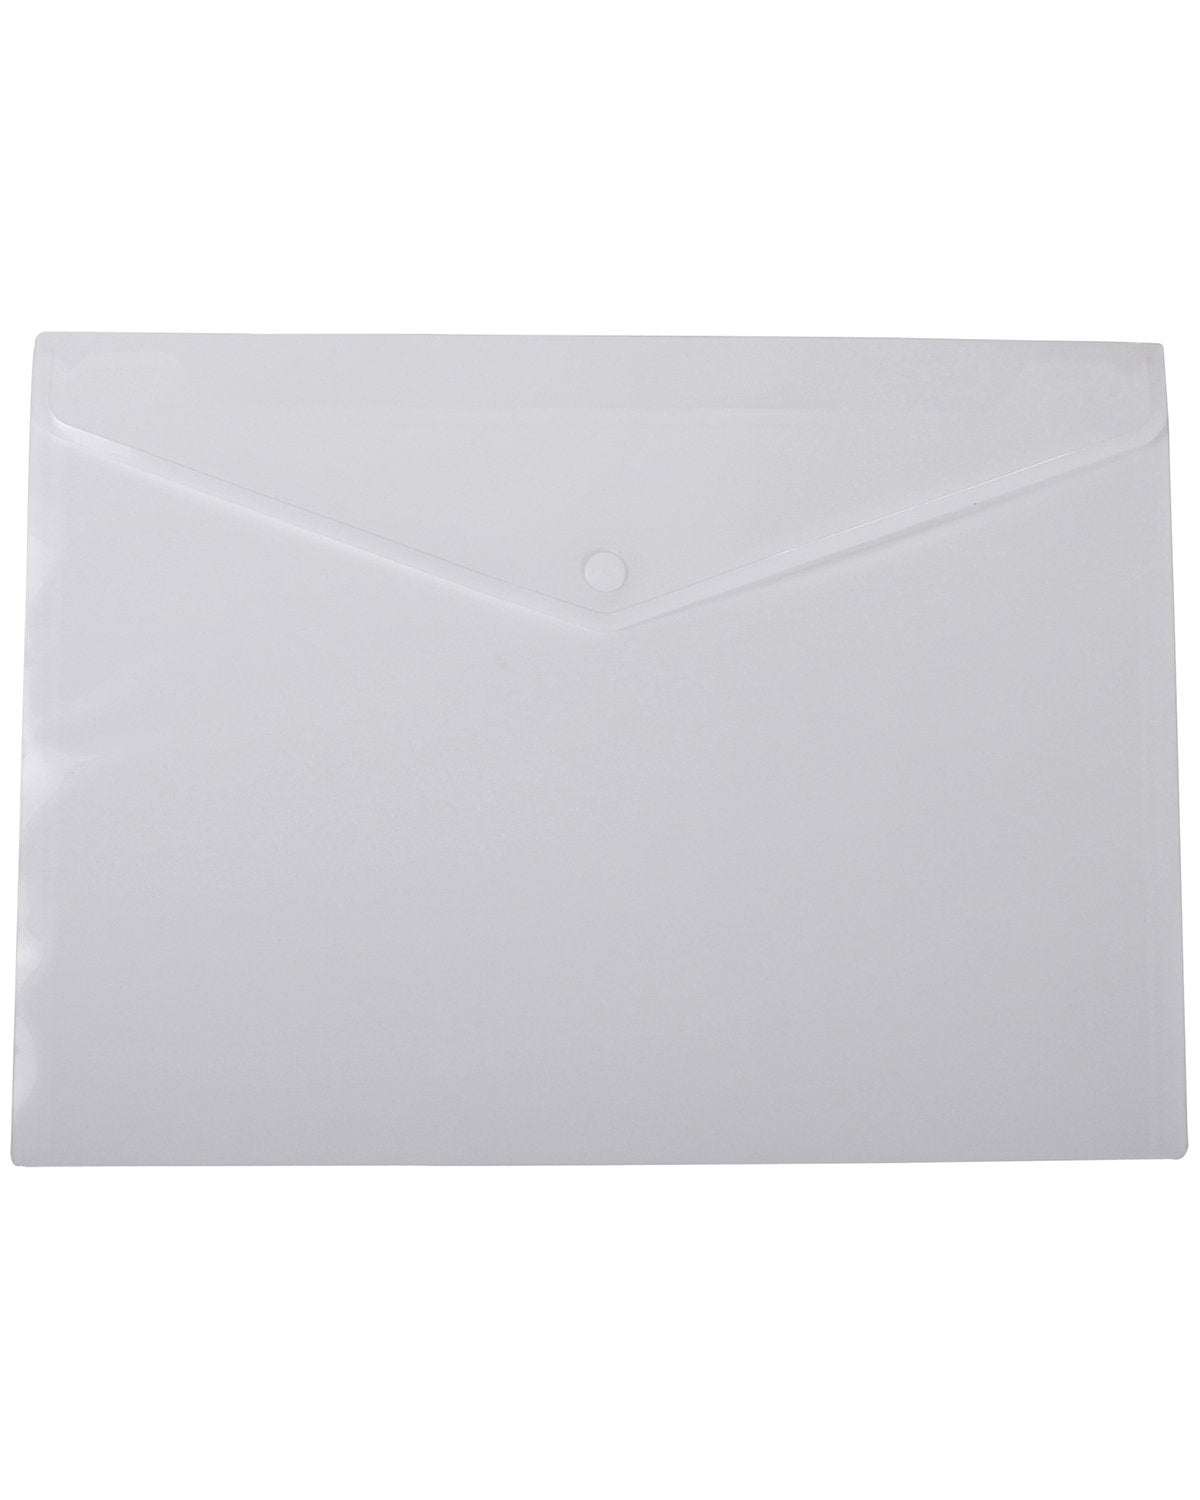 Letter-Size Document Envelope